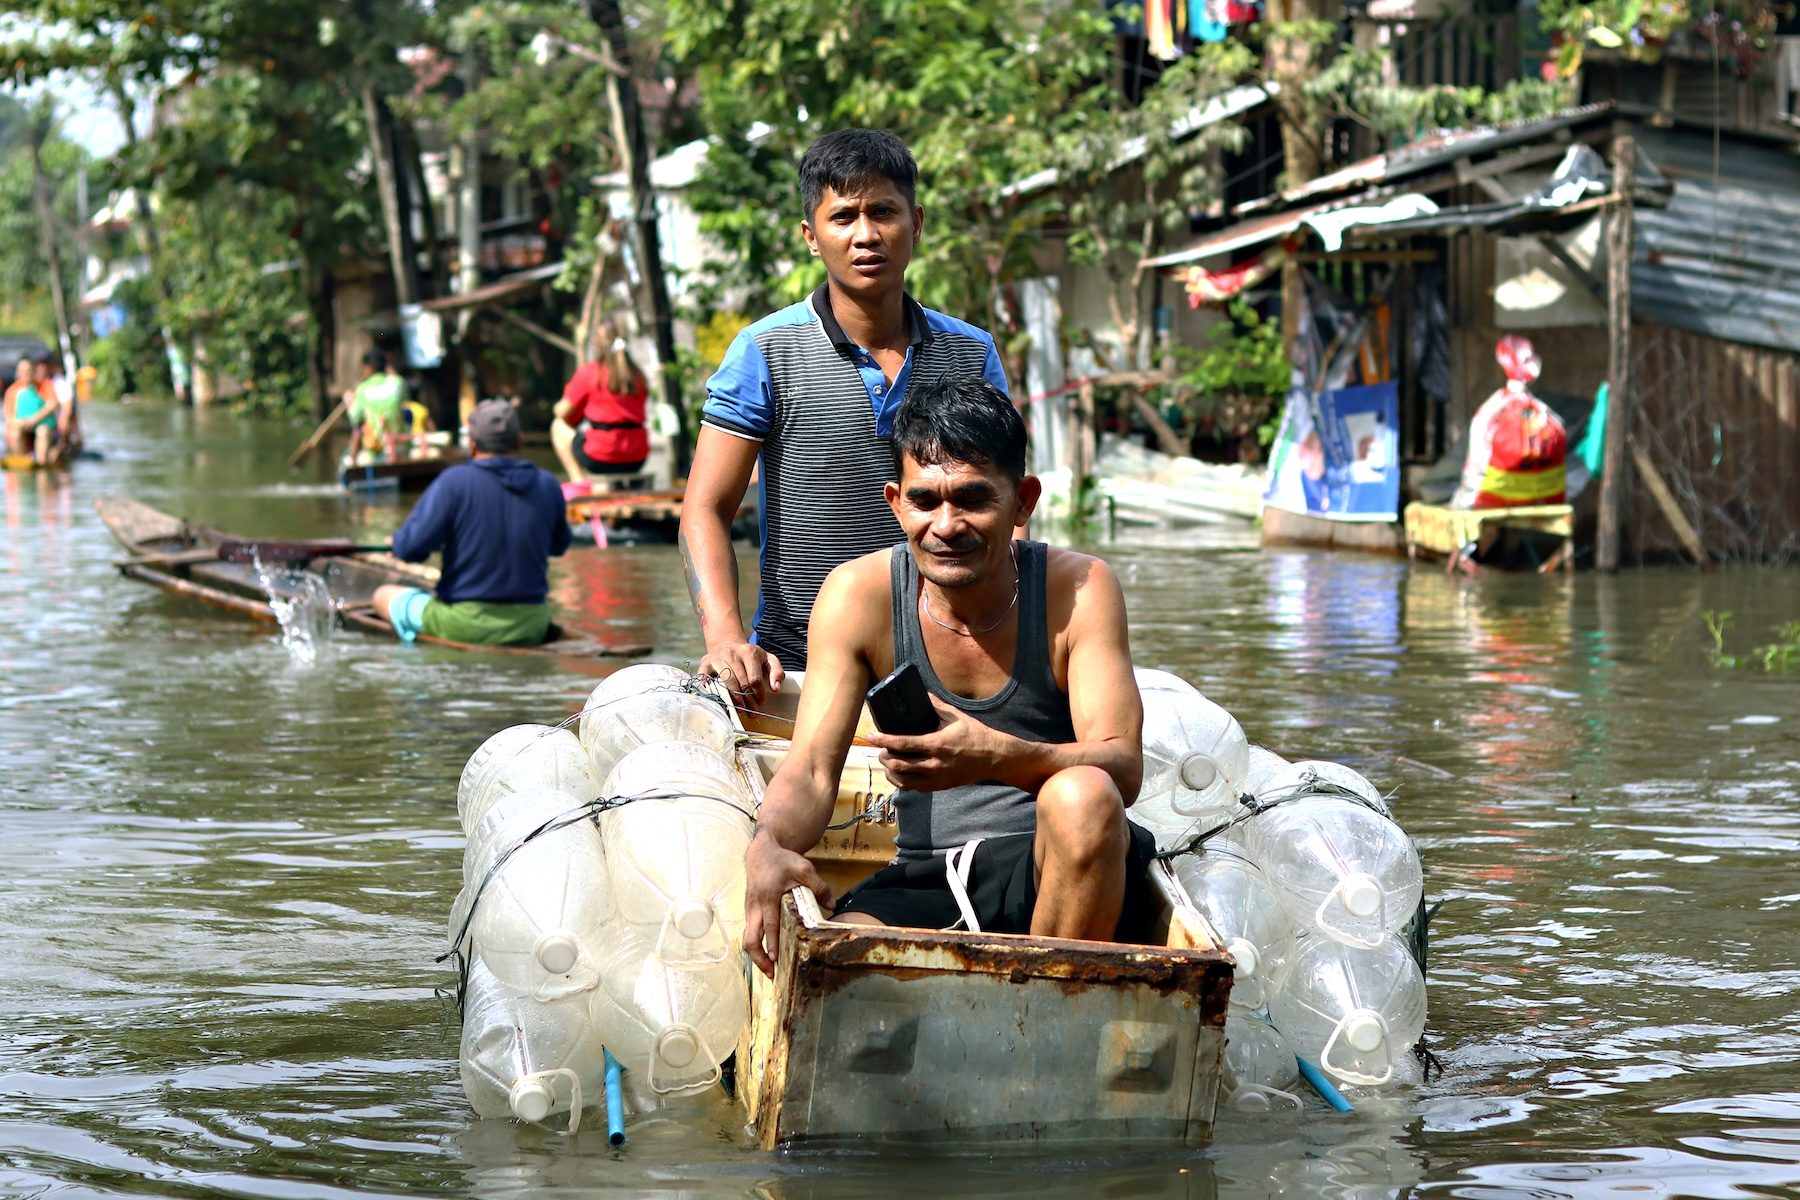 Dredge Agusan River to solve flooding problem, says governor